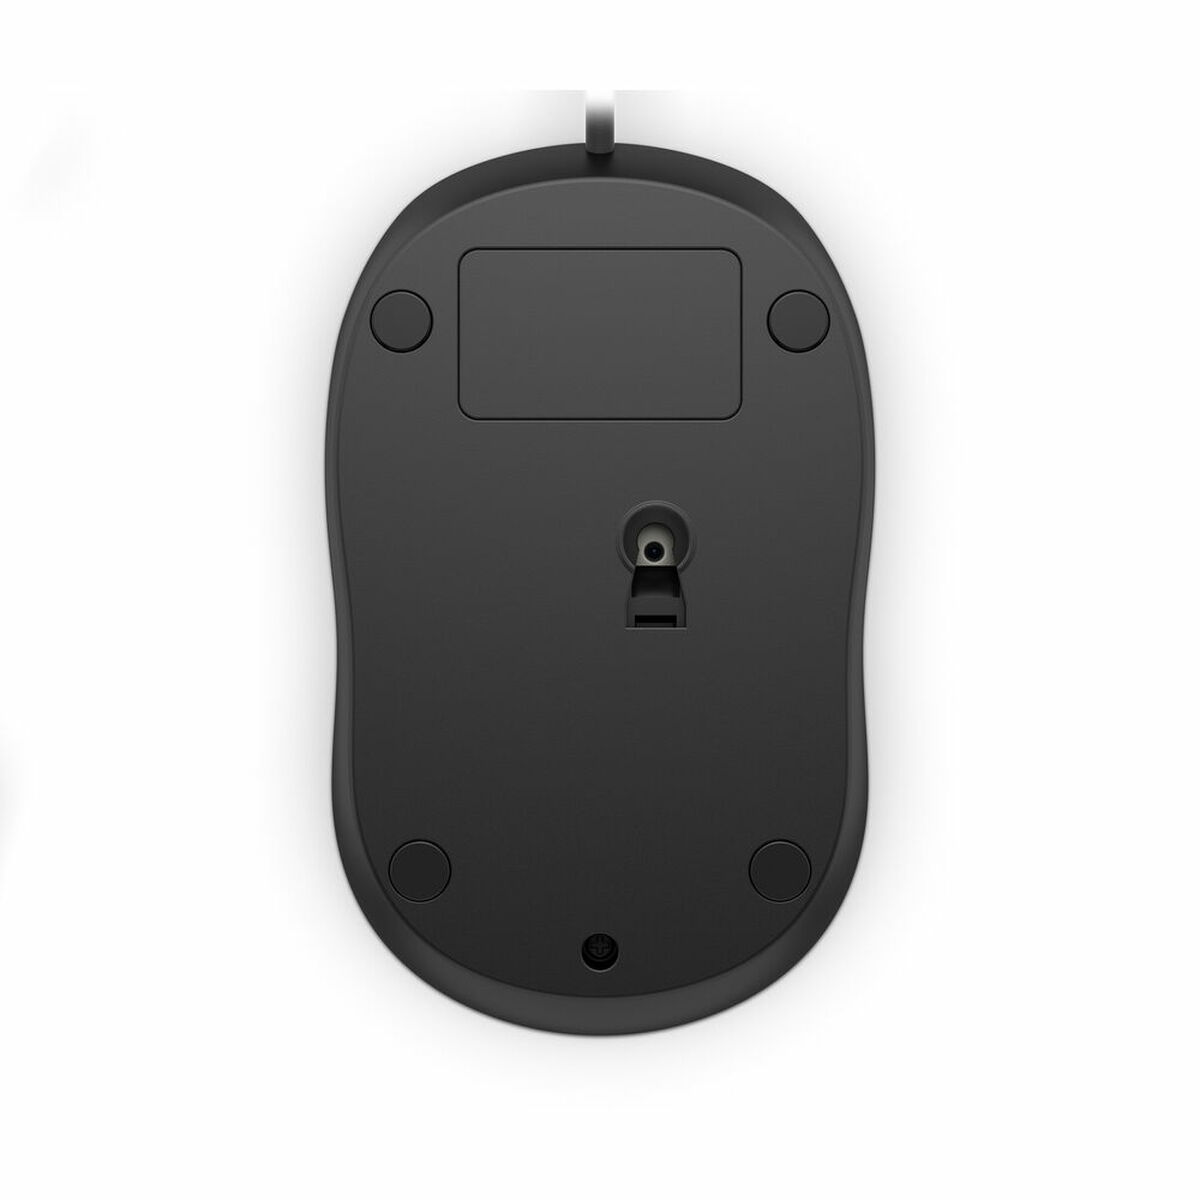 Mouse cu Cablu și Senzor Optic HP 1000